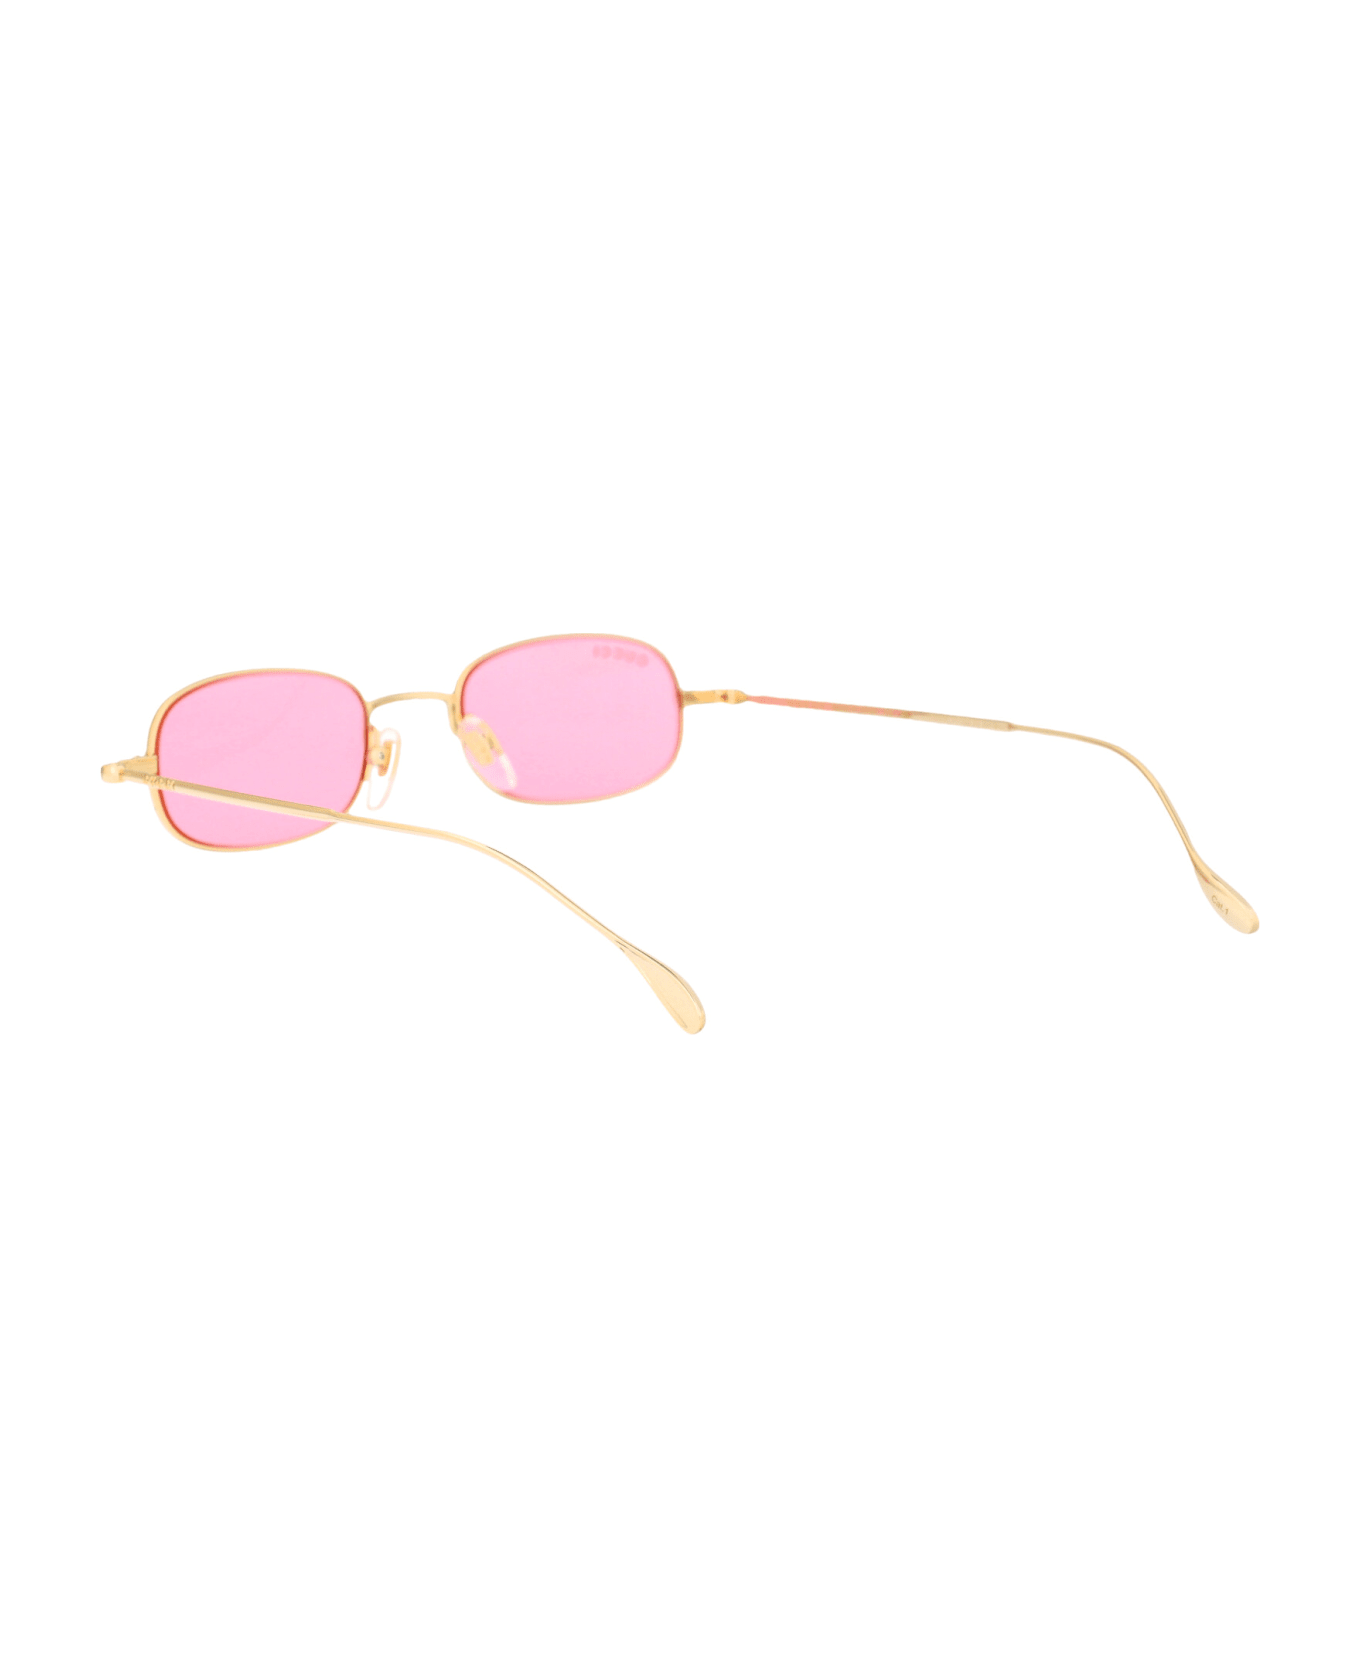 Gucci Eyewear Gg1648s Sunglasses - 005 GOLD GOLD PINK サングラス